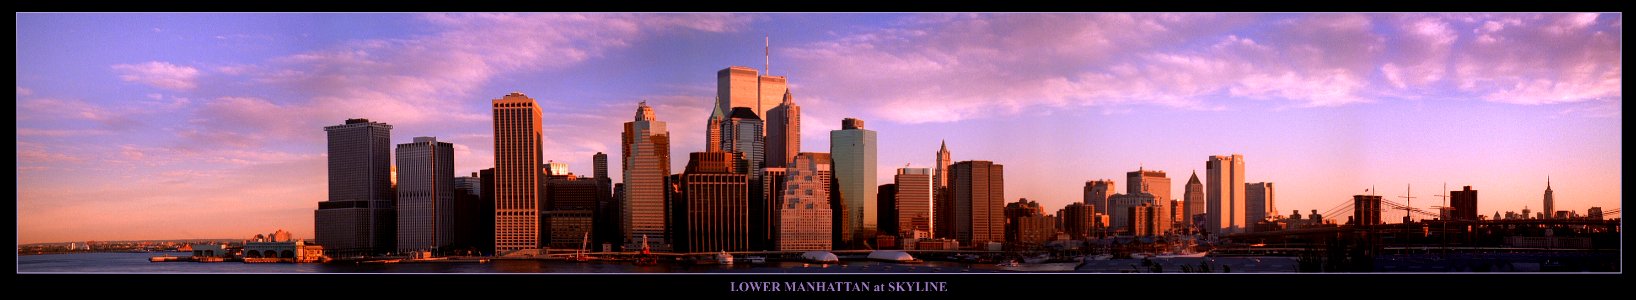 New York City. Lower Manhattan at skyline!